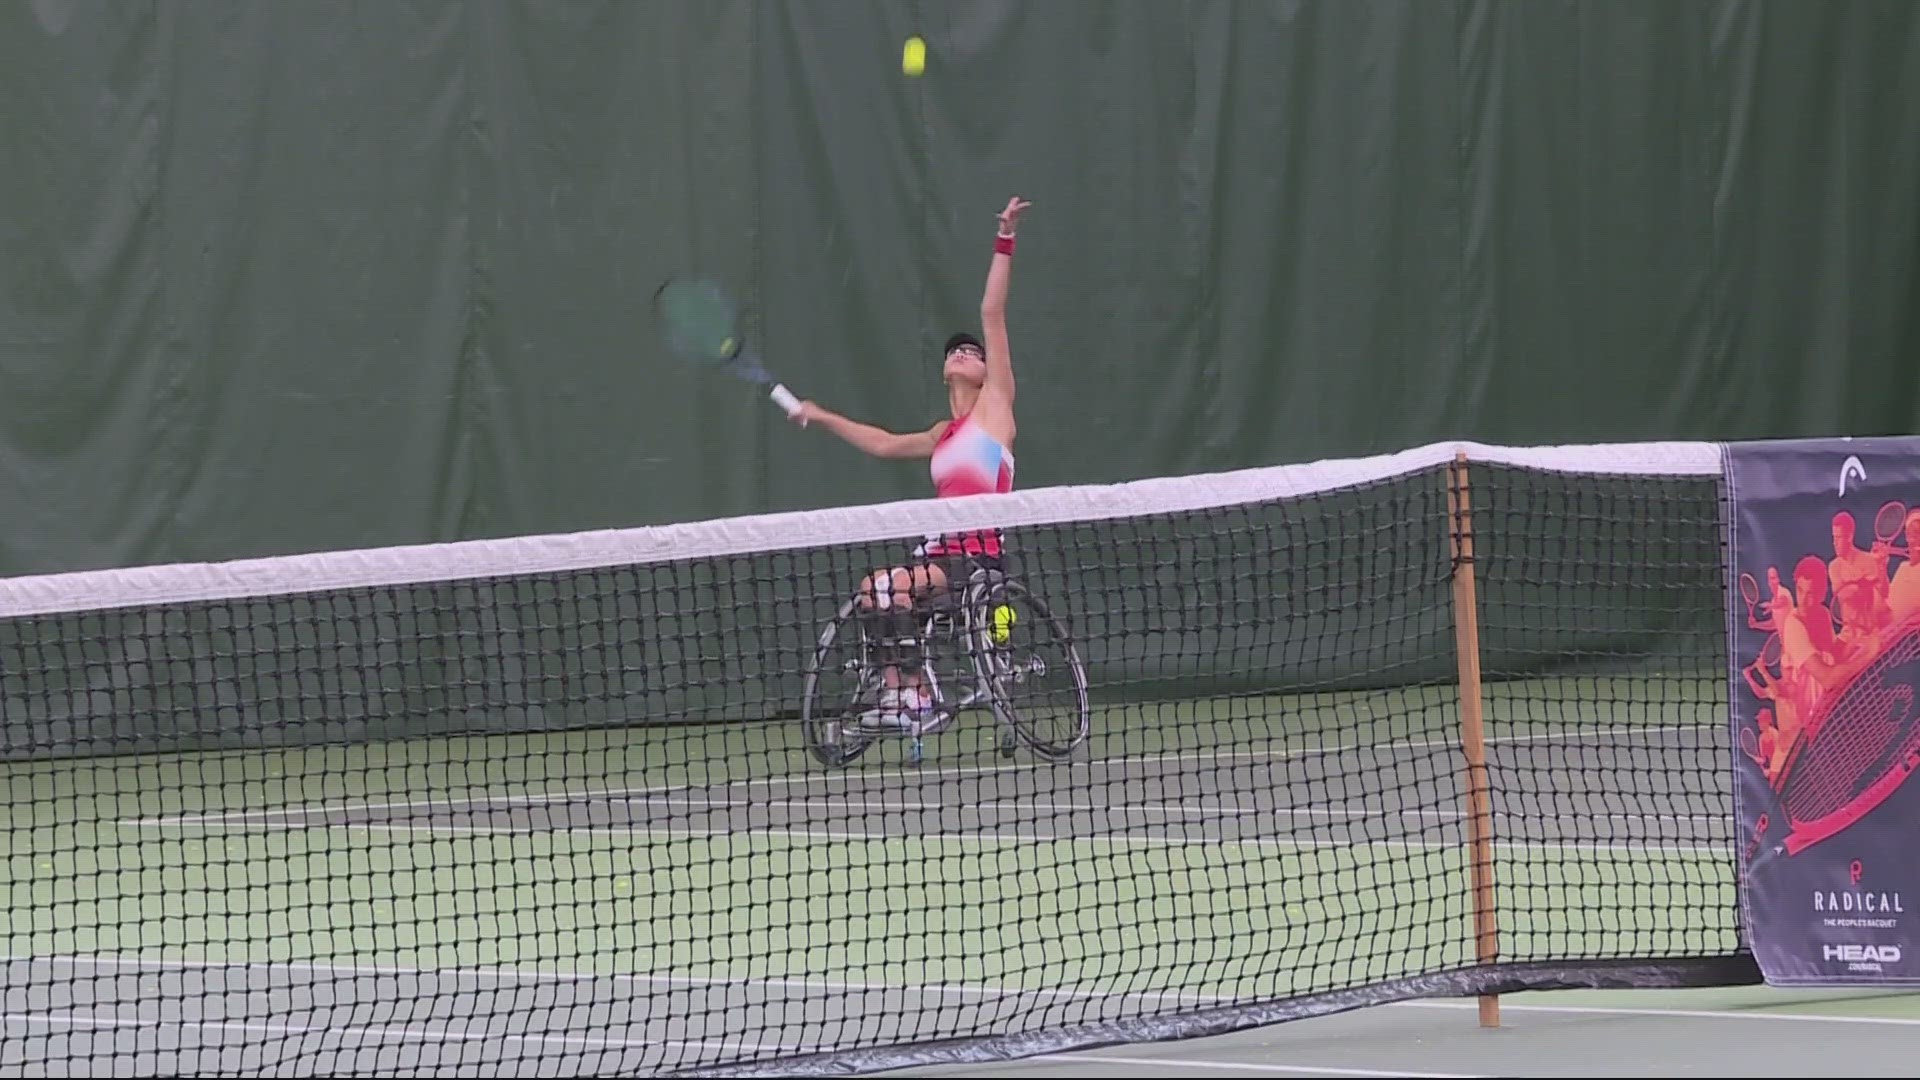 Salem hosts wheelchair tennis tournament kgw